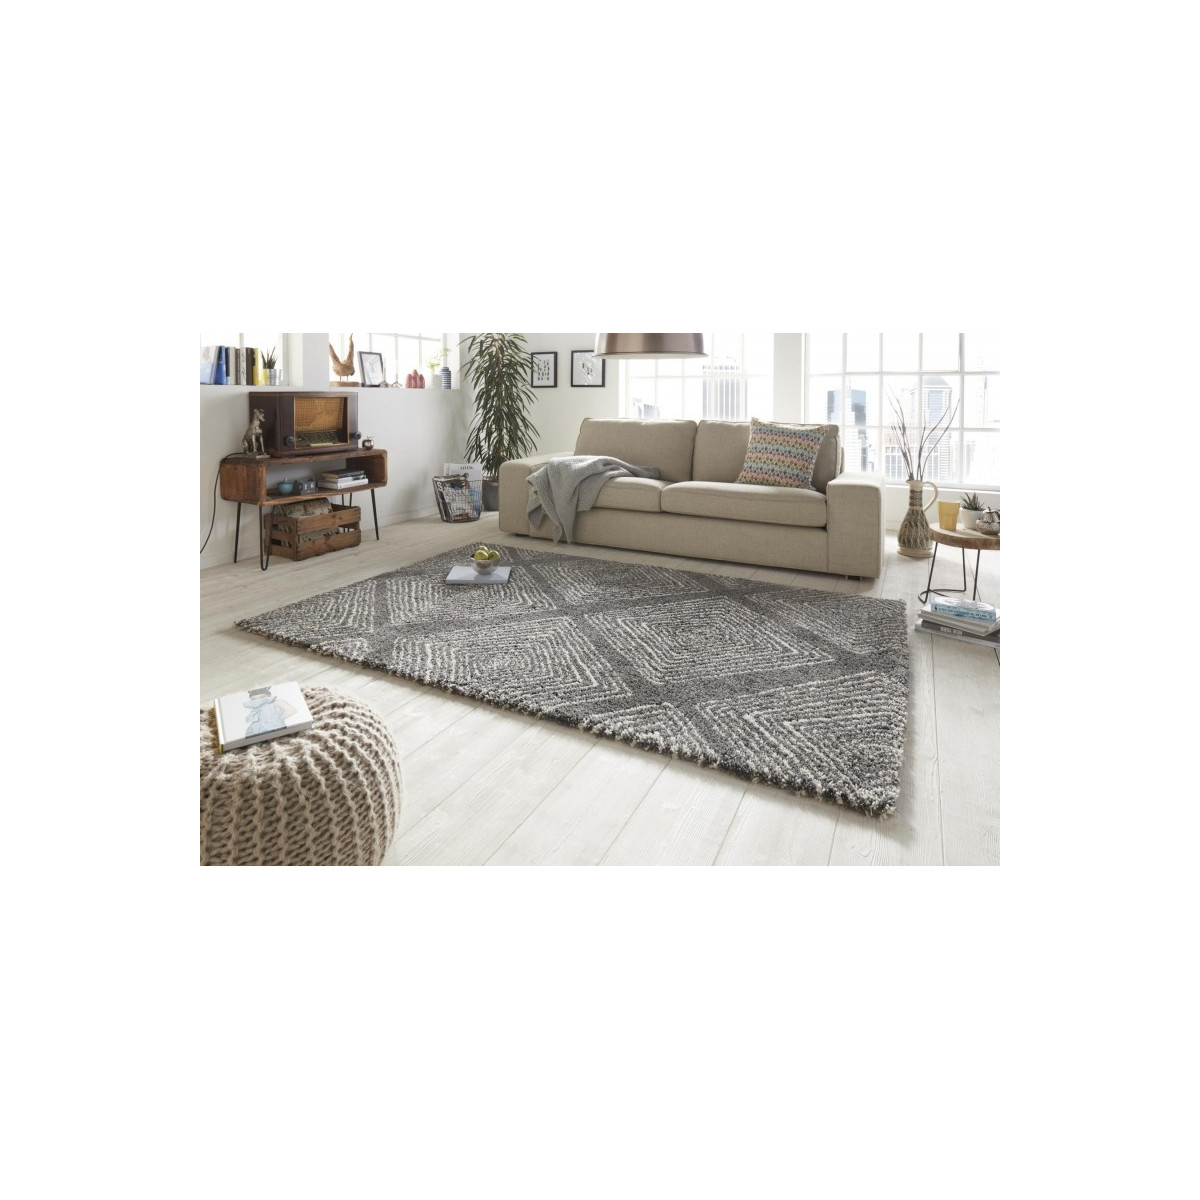 AKCIA: 80x150 cm Kusový koberec Allure 102763 grau creme